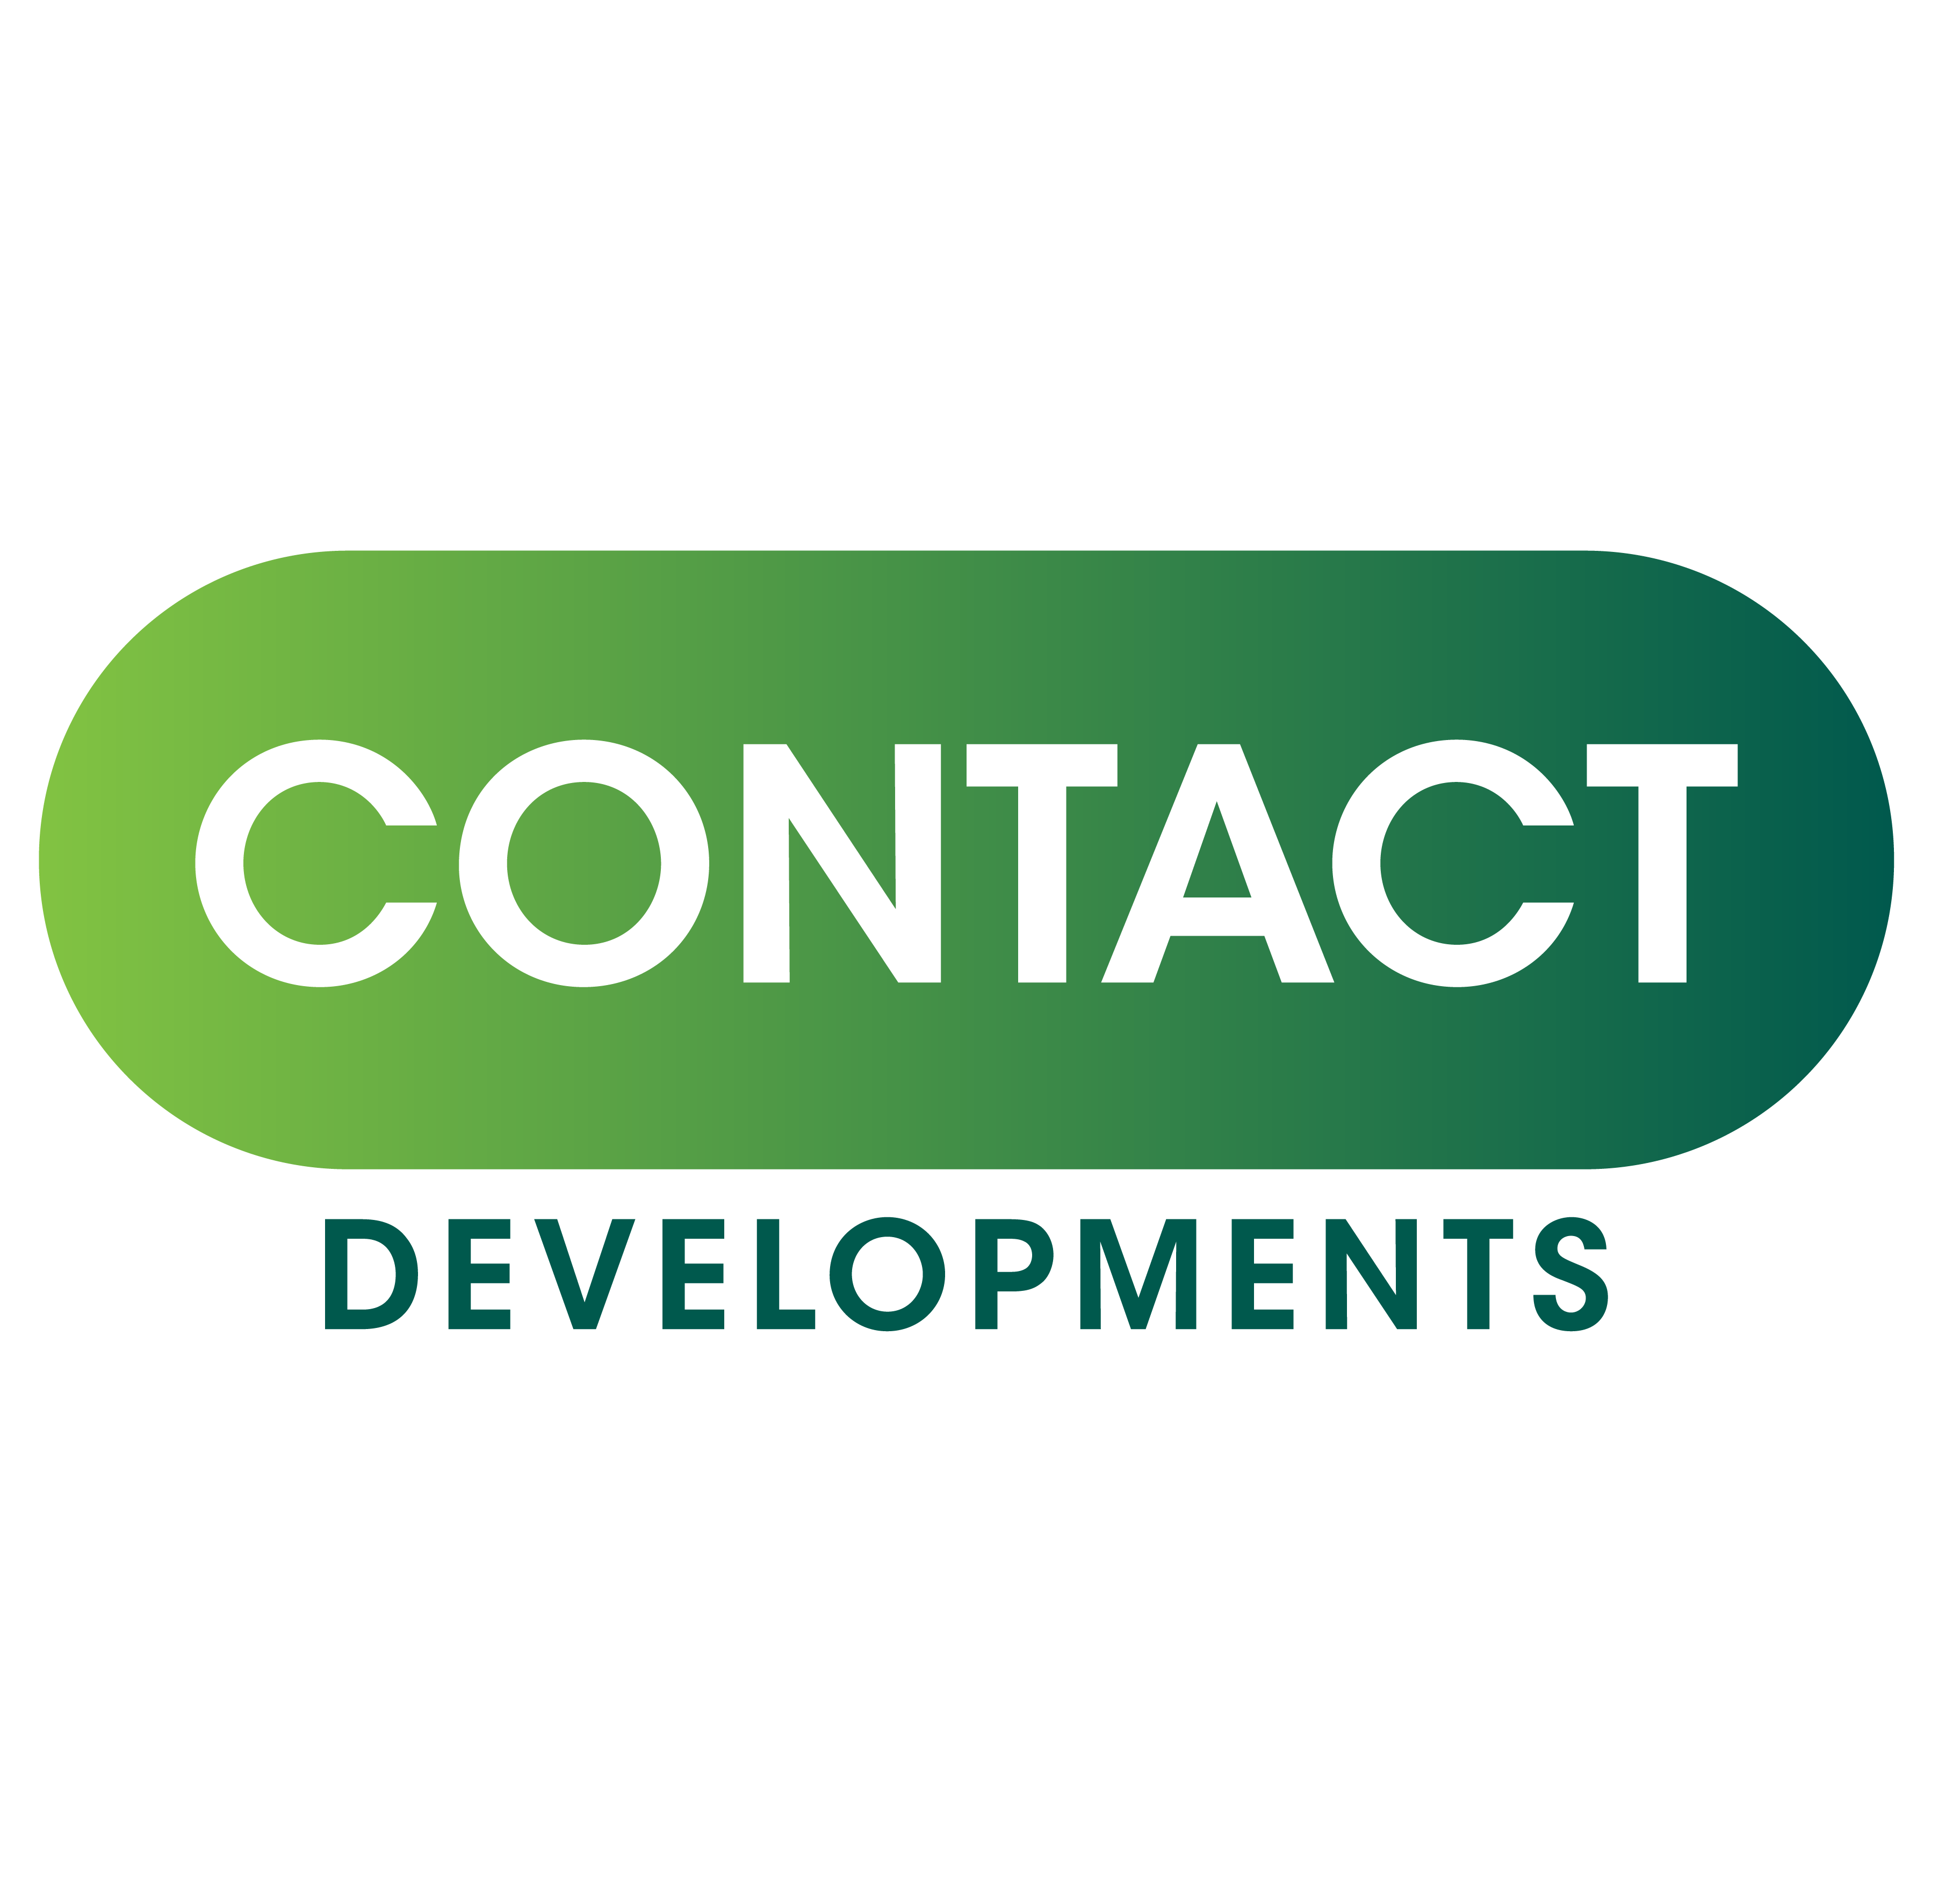 Contact Developments